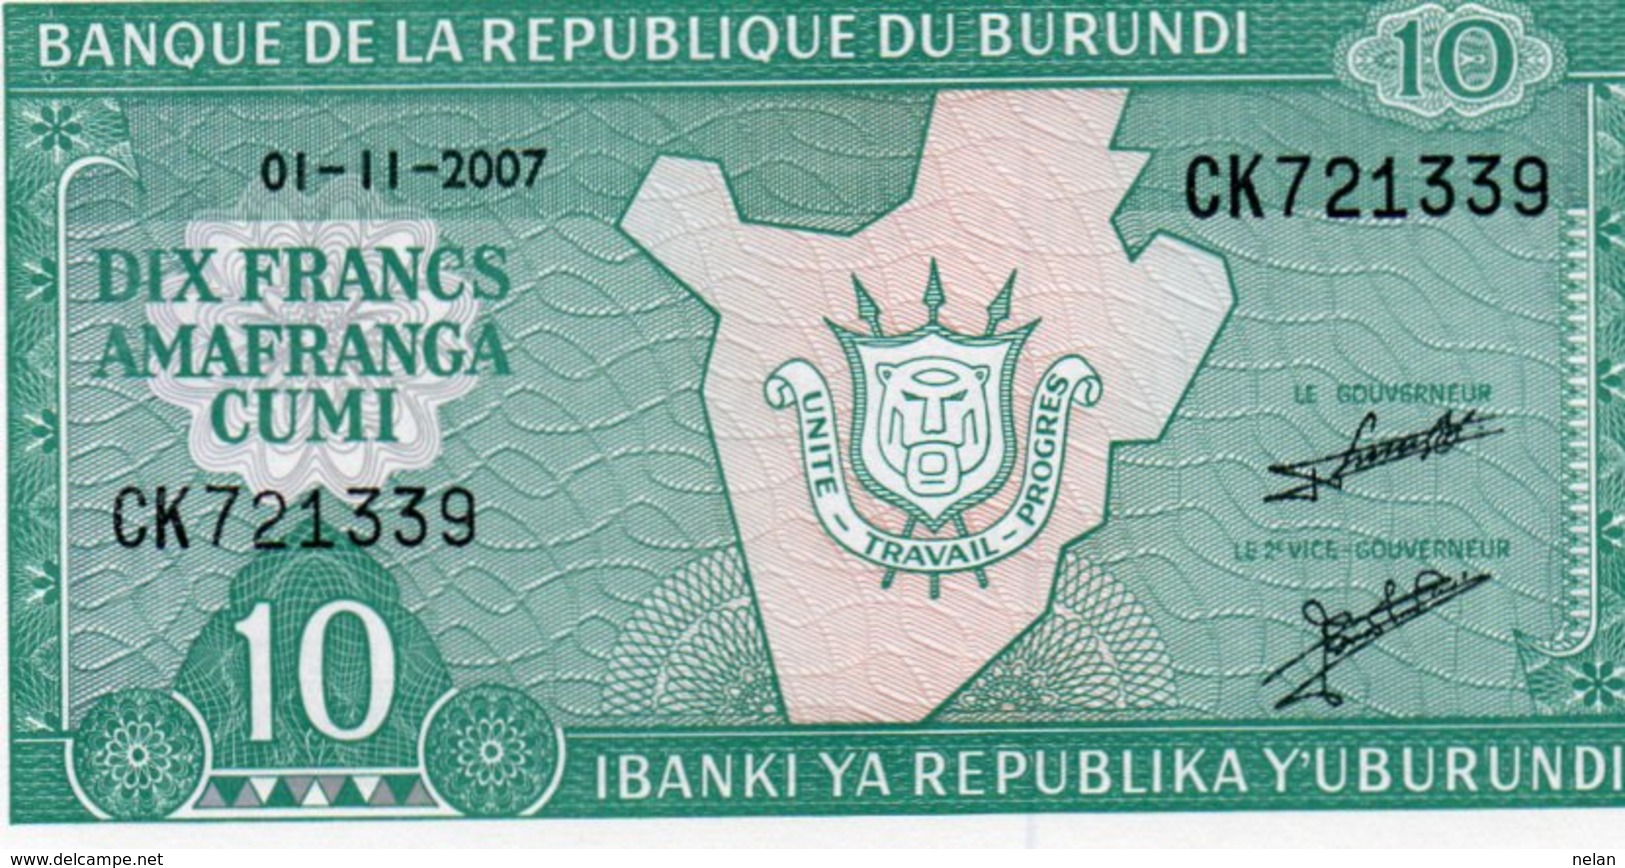 BURUNDI 10 FRANCS 2007 P-33e.2 UNC - Burundi